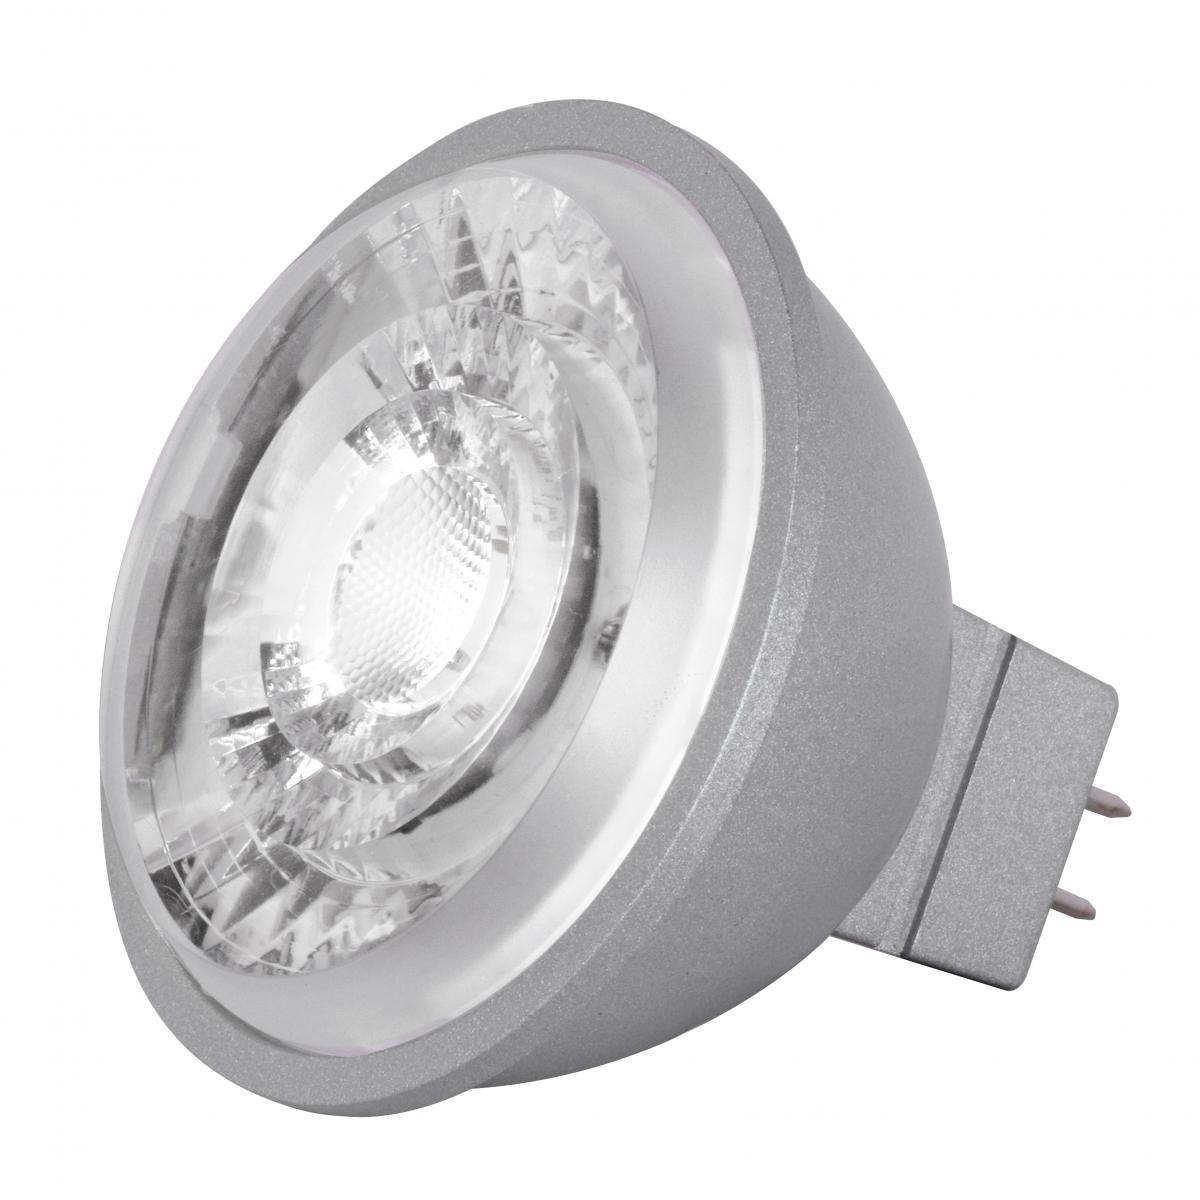 MR16 Reflector LED bulb, 8 watt, 490 Lumens, 5000K, GU5.3 Base, 15 Deg. Spot